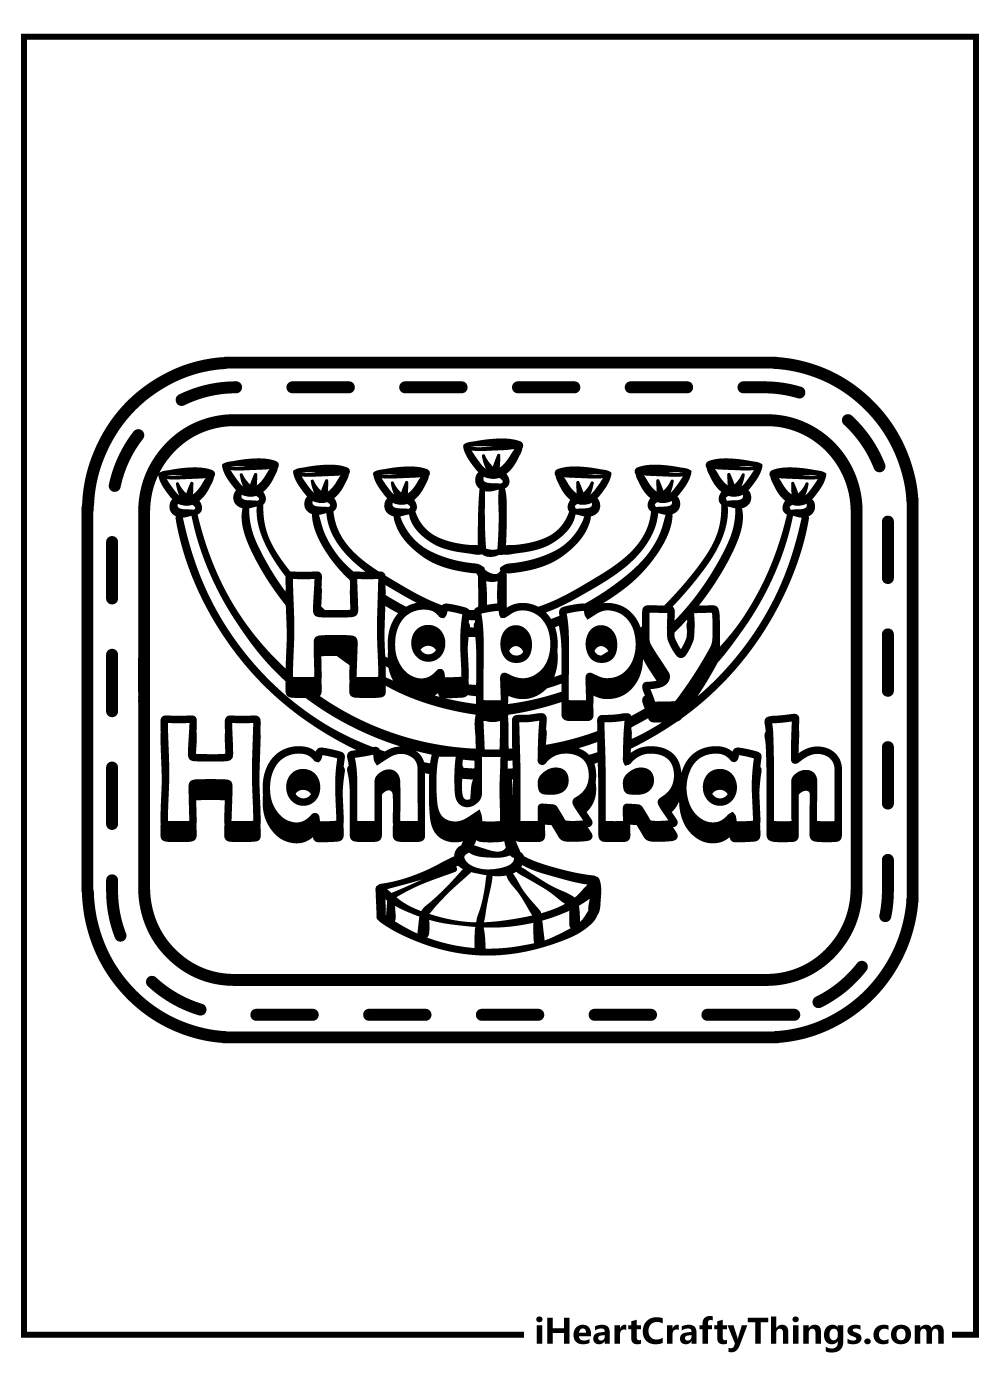 Hanukkah Coloring Sheet for children free download